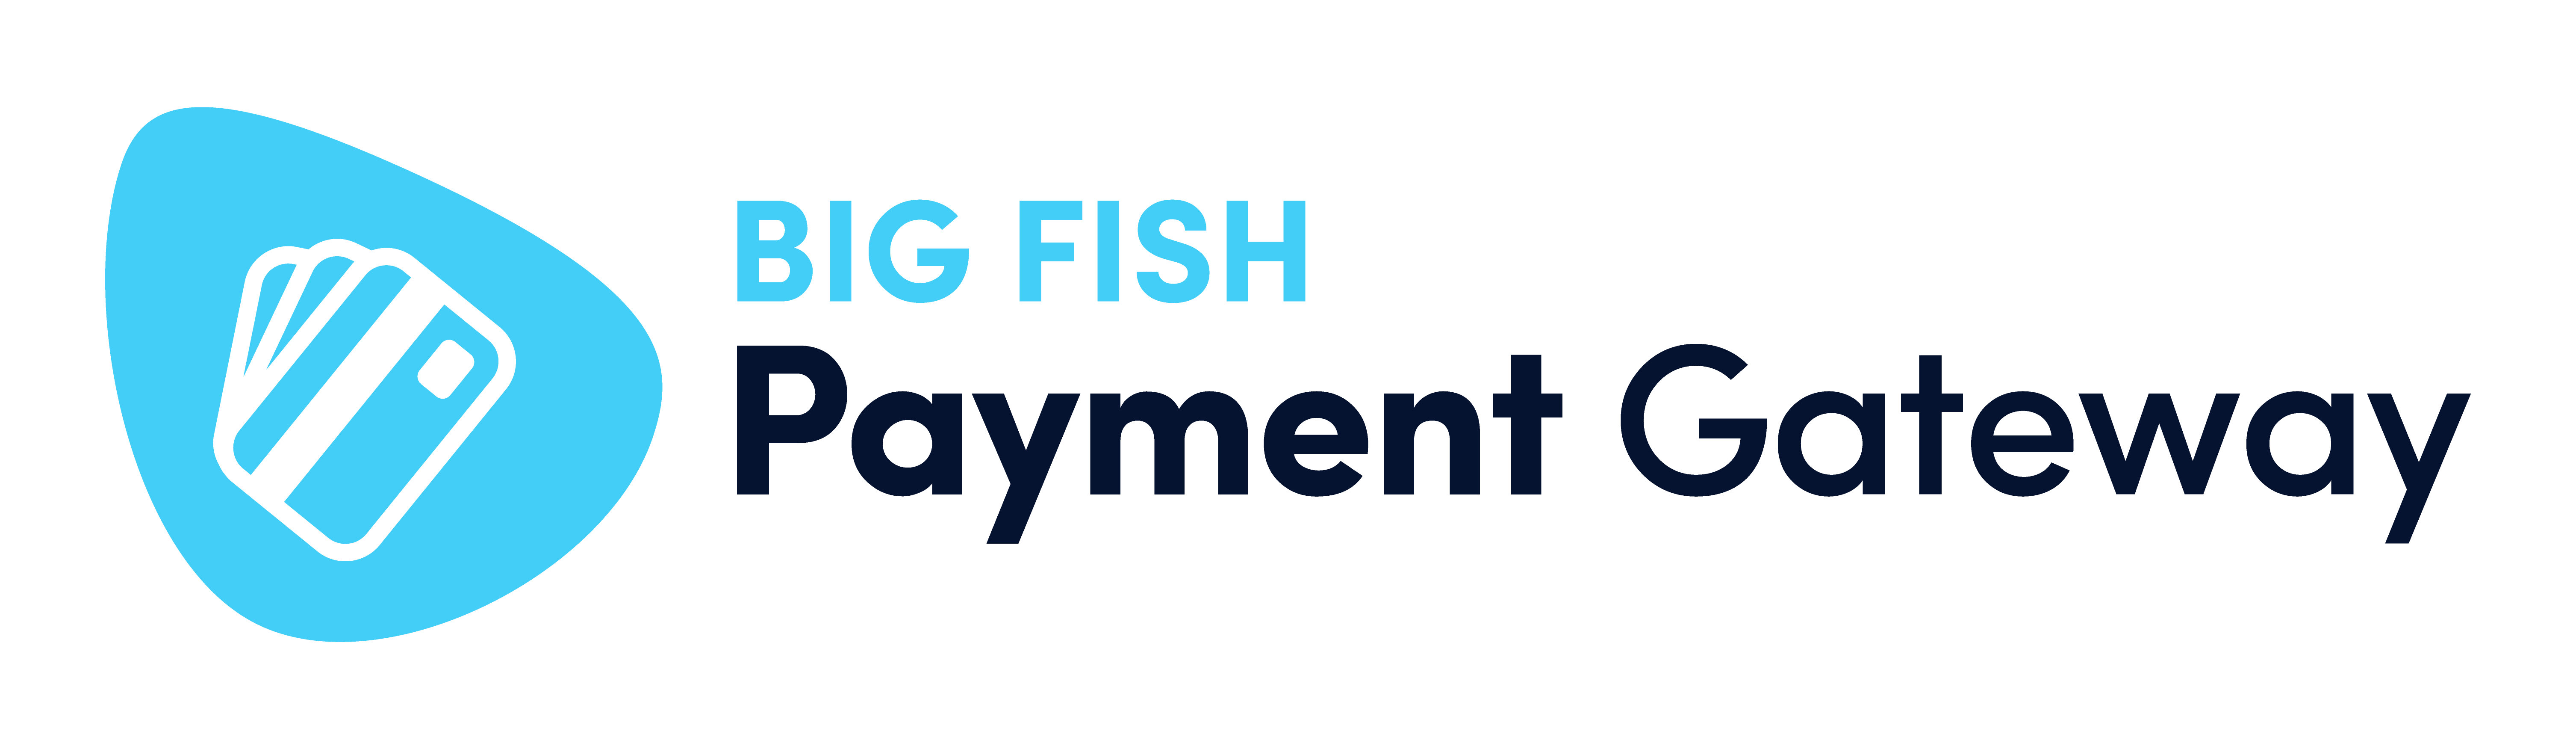 Big Fish Payment Gateway